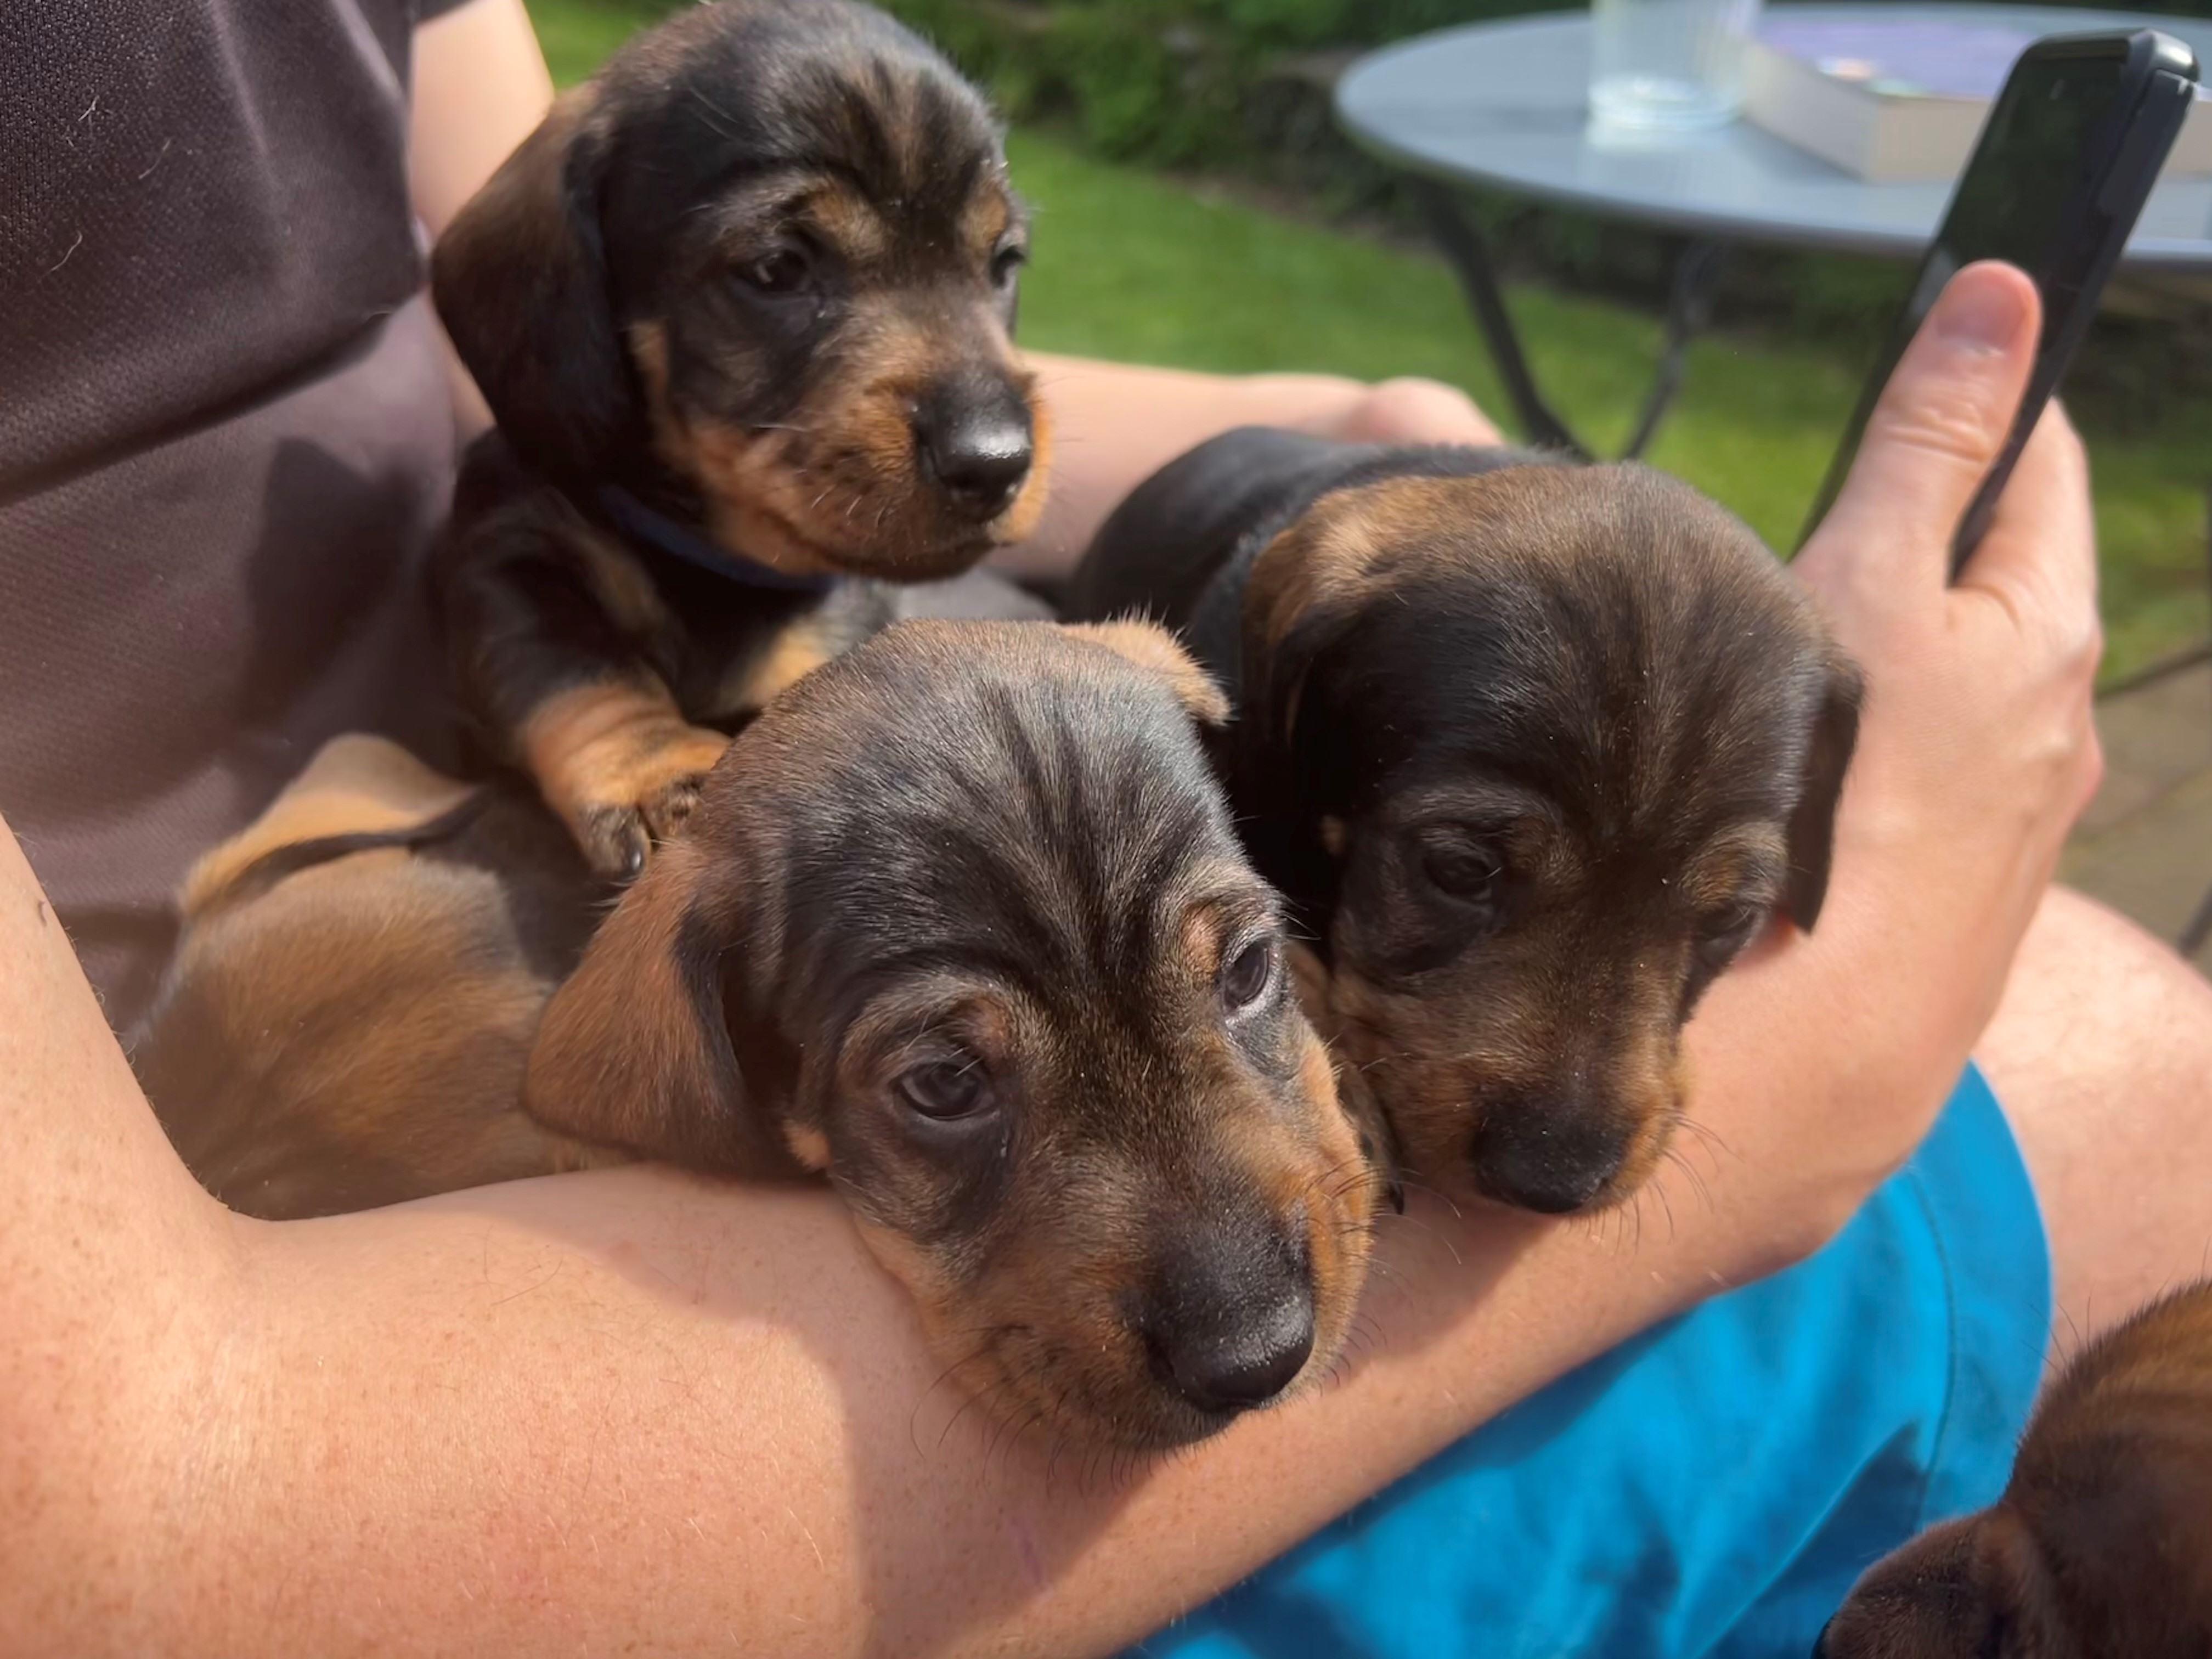 Three pups together